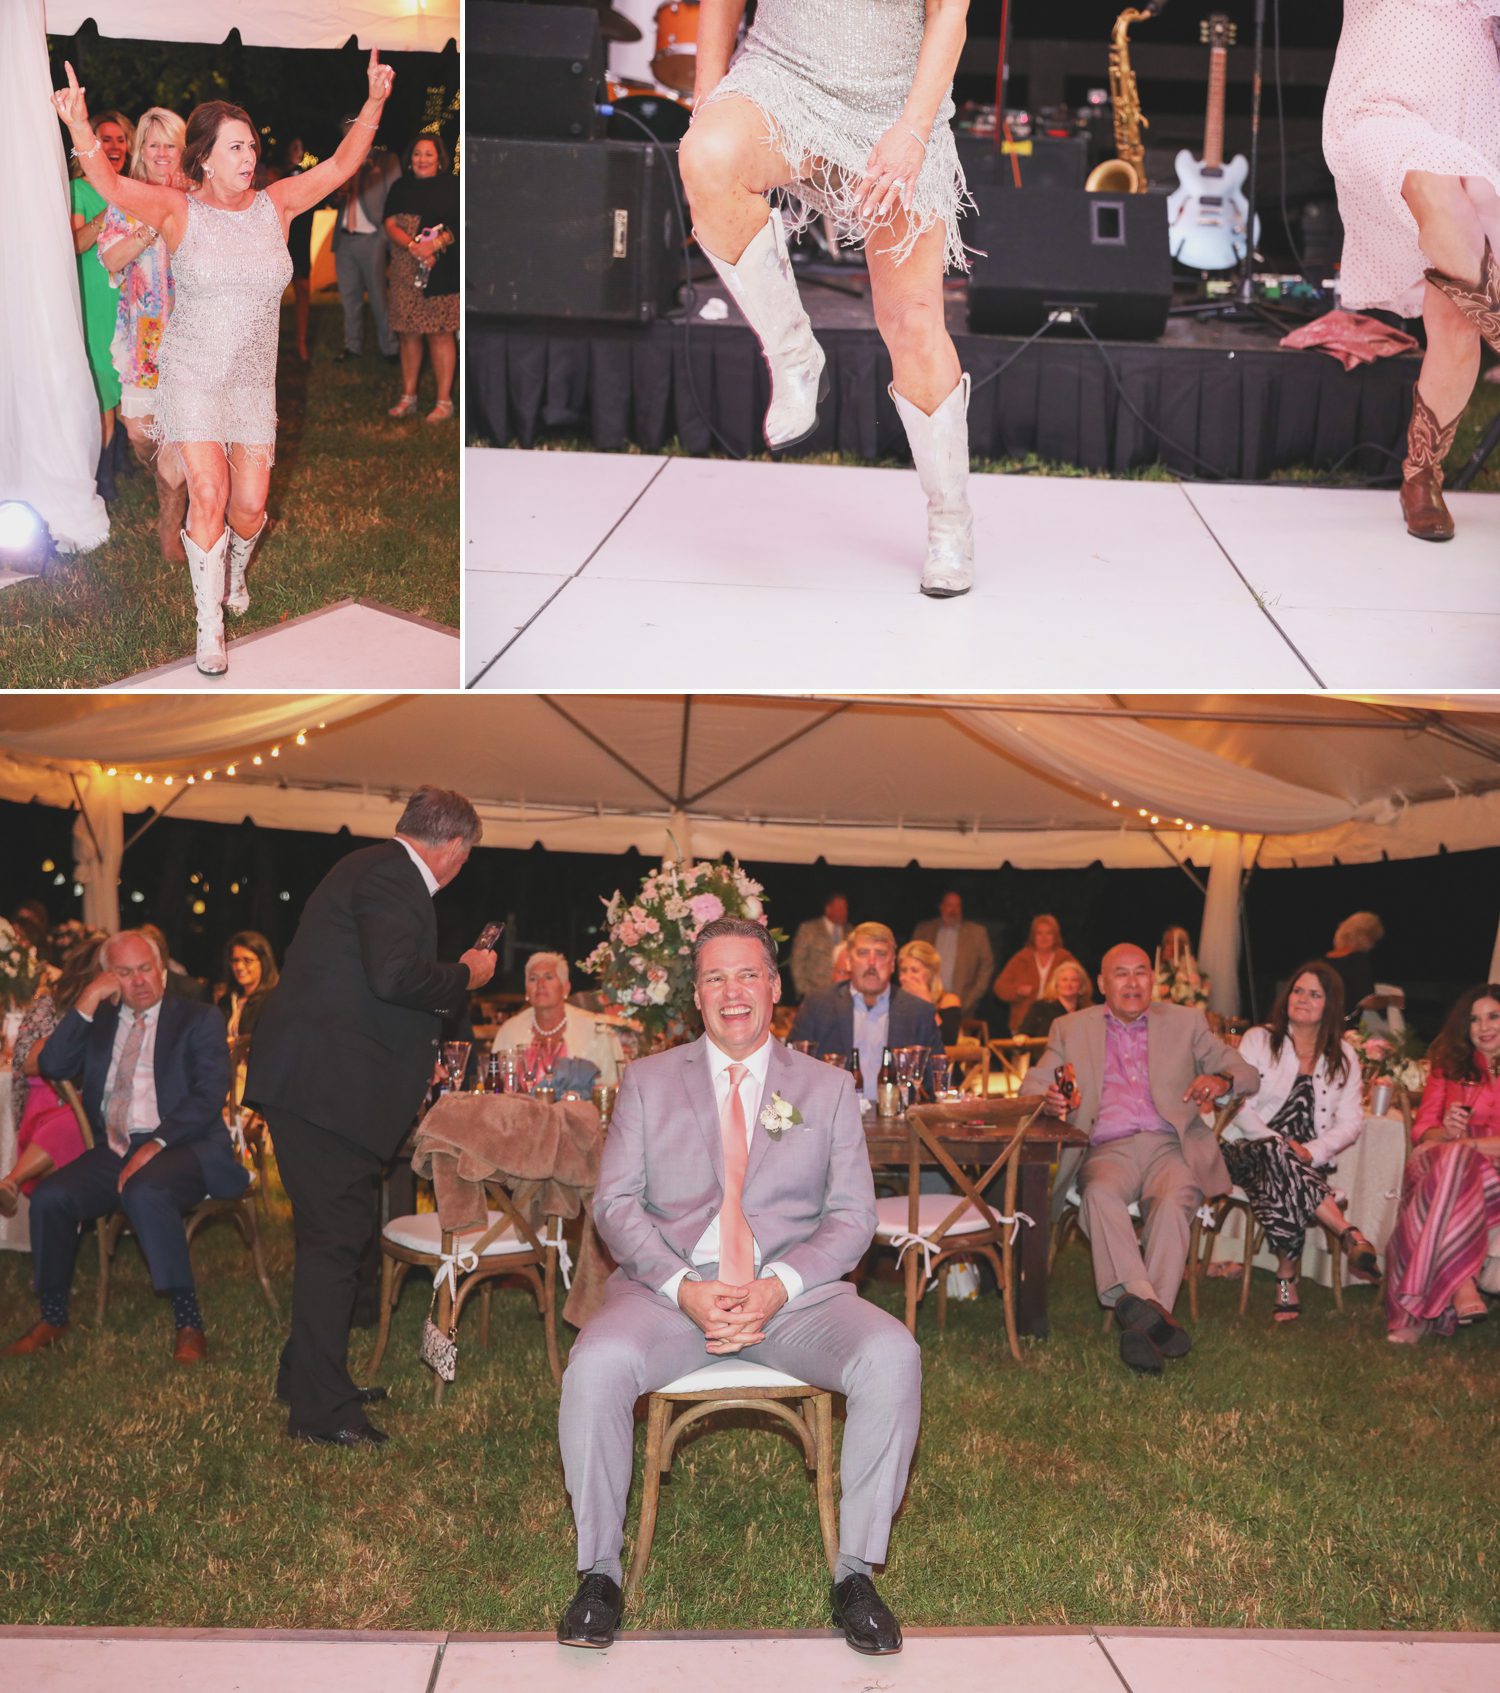 Luxury Bellareed Farm Equestrian Estate Wedding Reception in Franklin, TN Bride's Surprise Dance for Groom